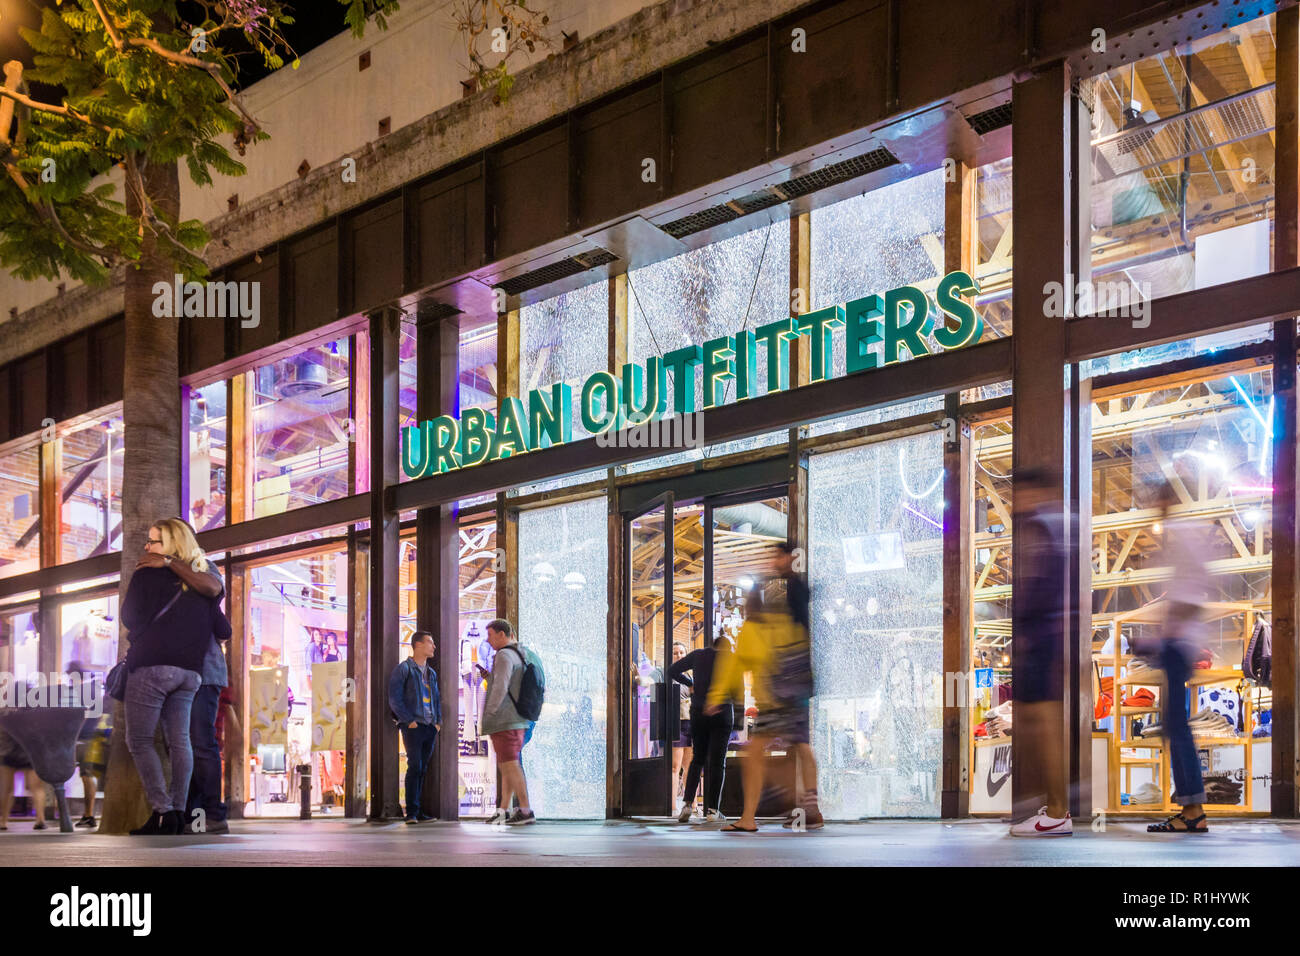 Urban Outfitters store in Santa Monica, California Stock Photo